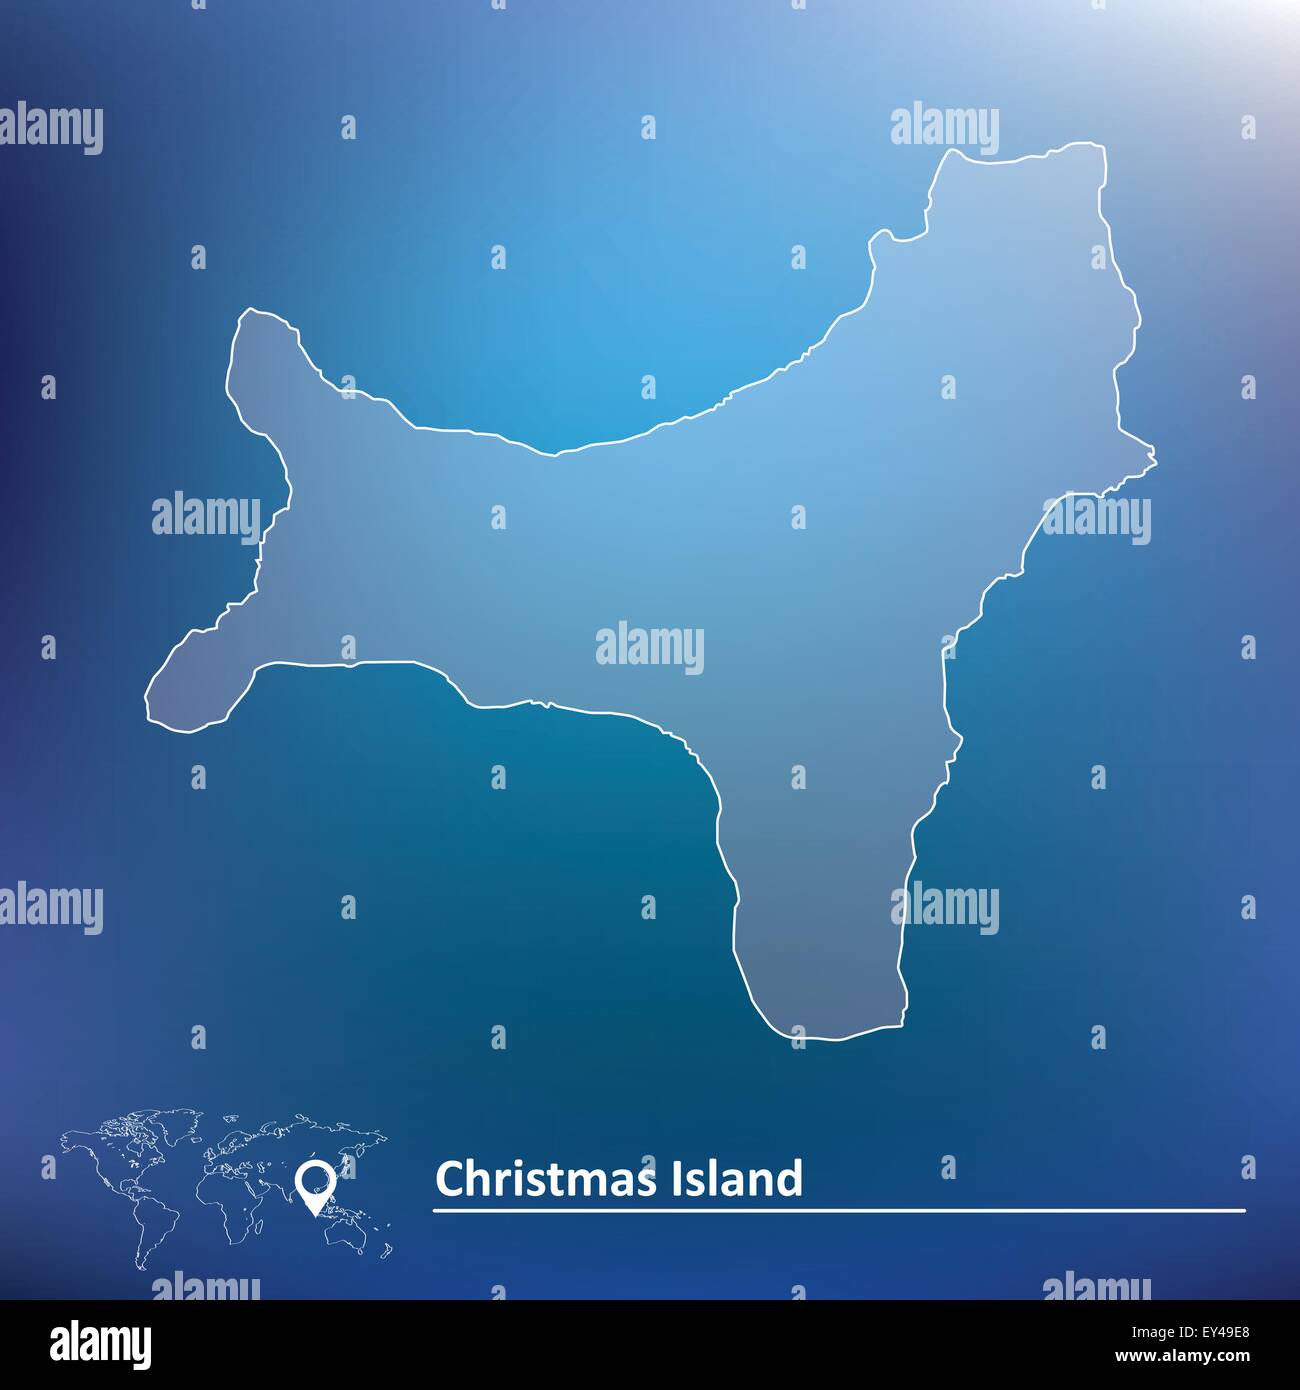 Map of Christmas Island - vector illustration Stock Vector